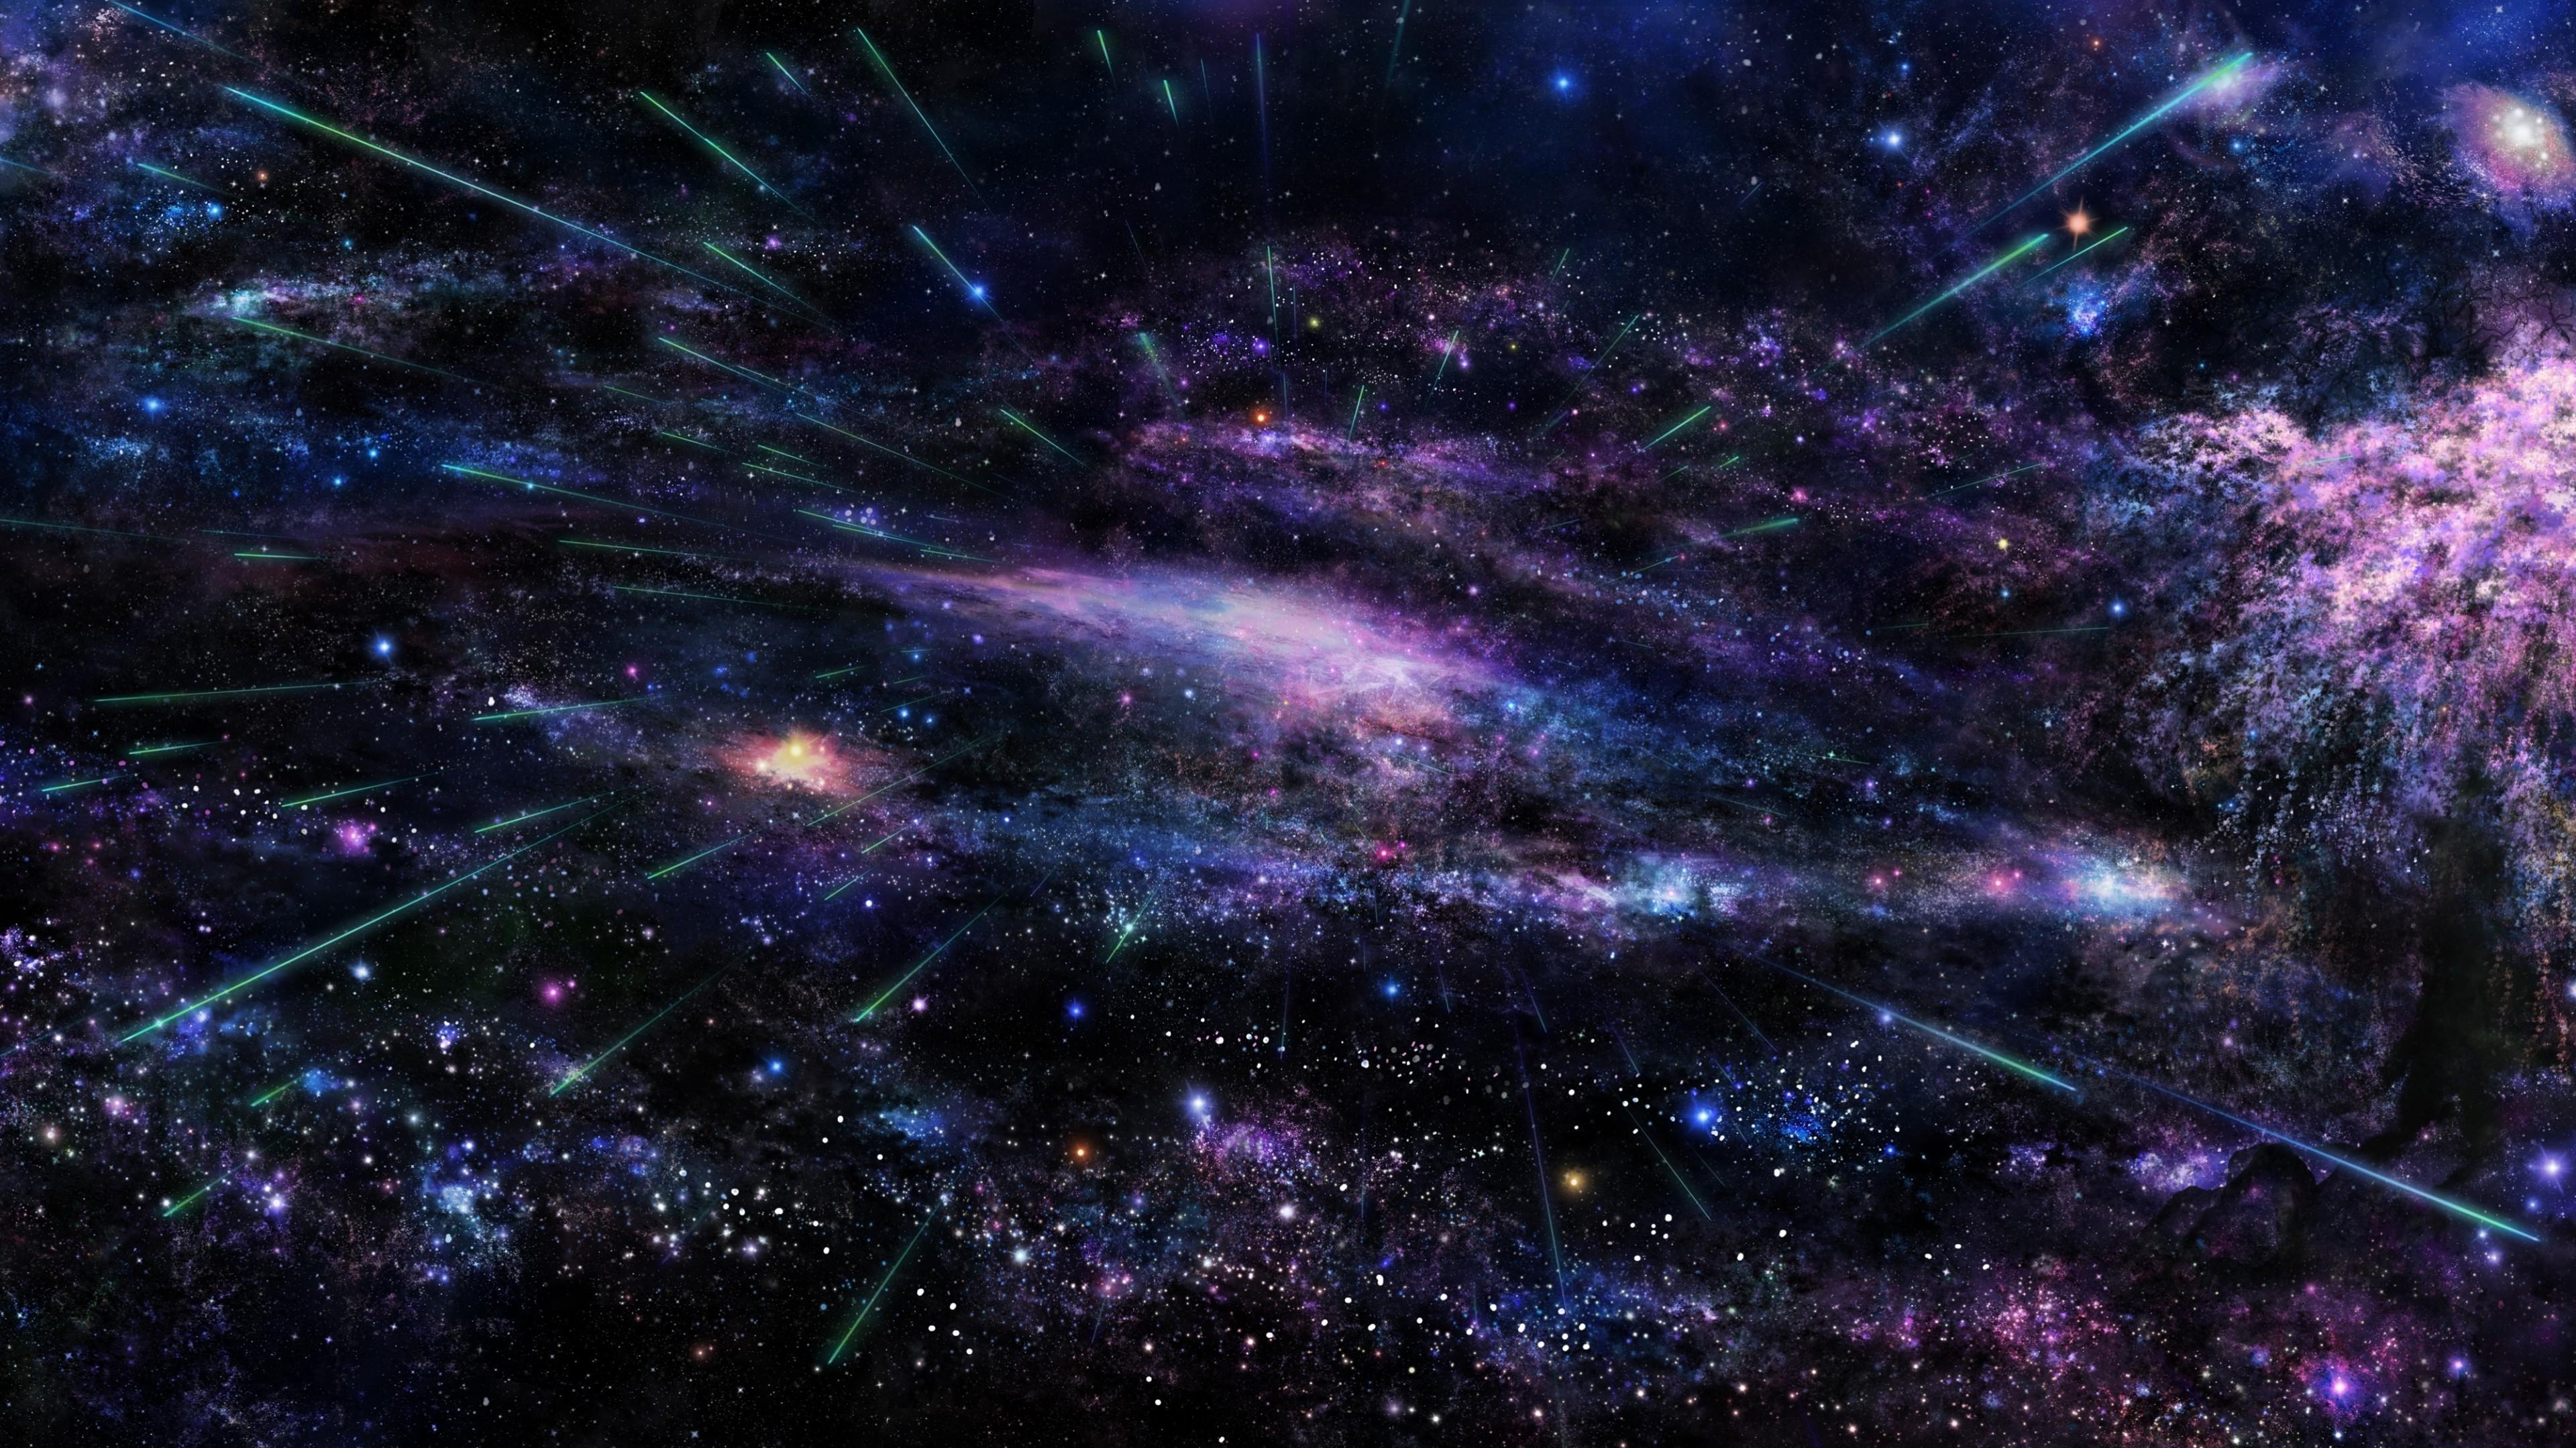 4k Galaxy Wallpaper Image